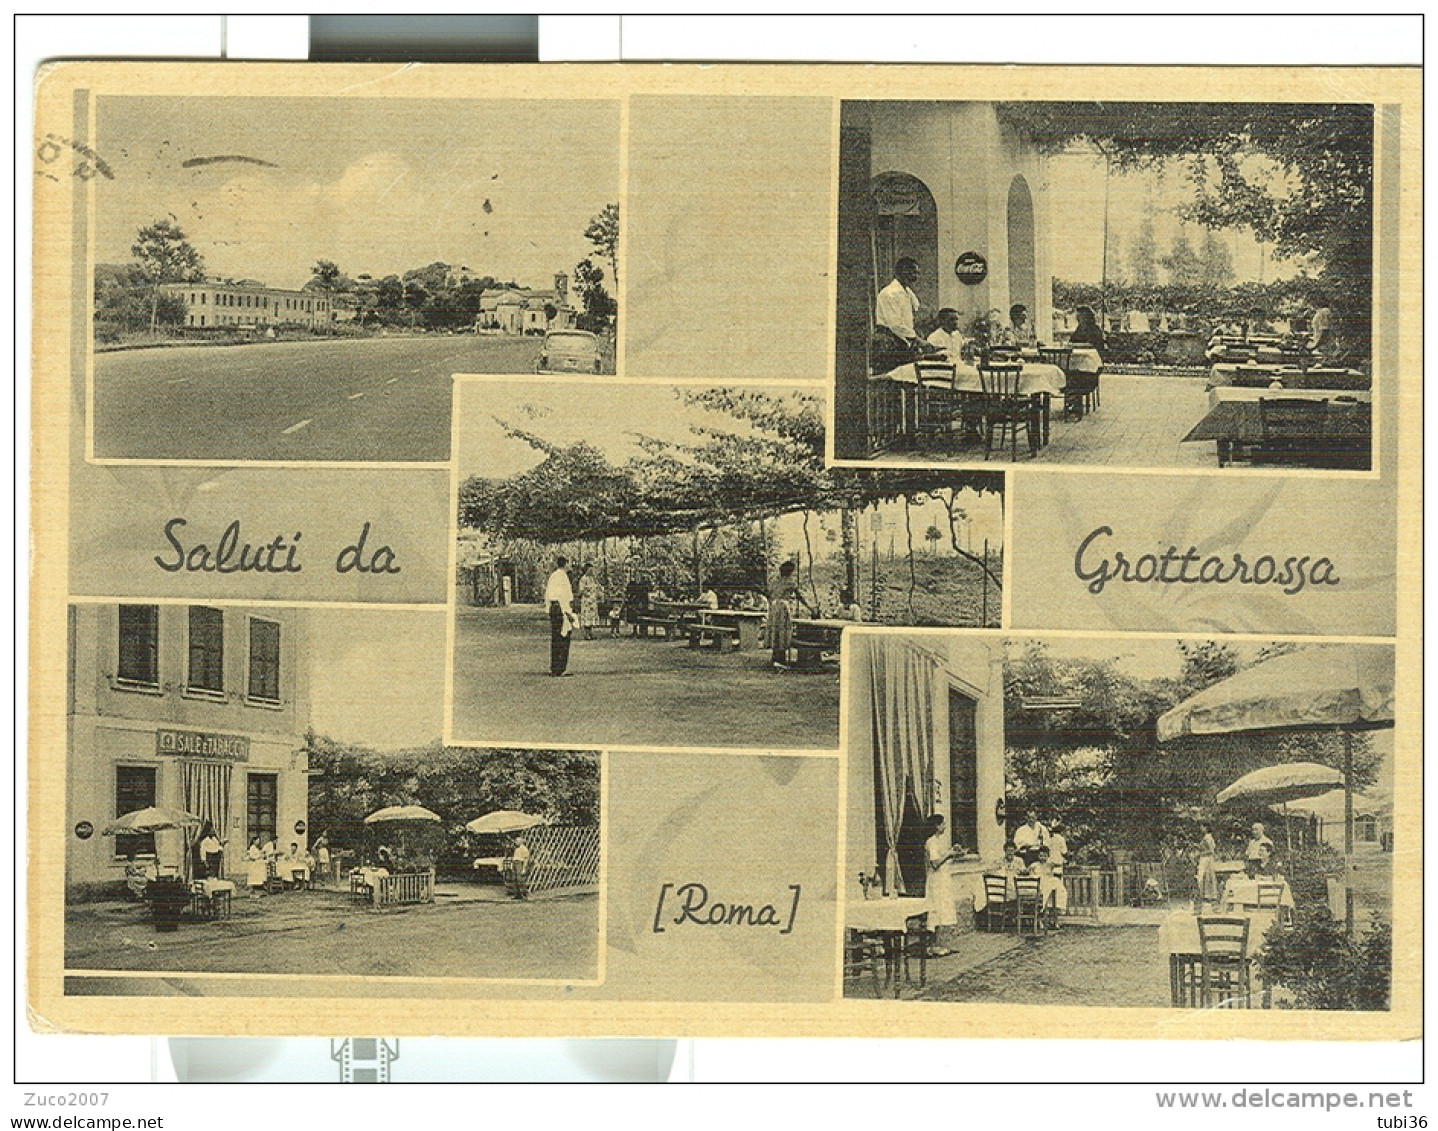 GROTTAROSSA TRATTORIA , ROMA,  5 VEDUTE, B/N VIAGGIATA  1957, ANIMATA, - Bares, Hoteles Y Restaurantes